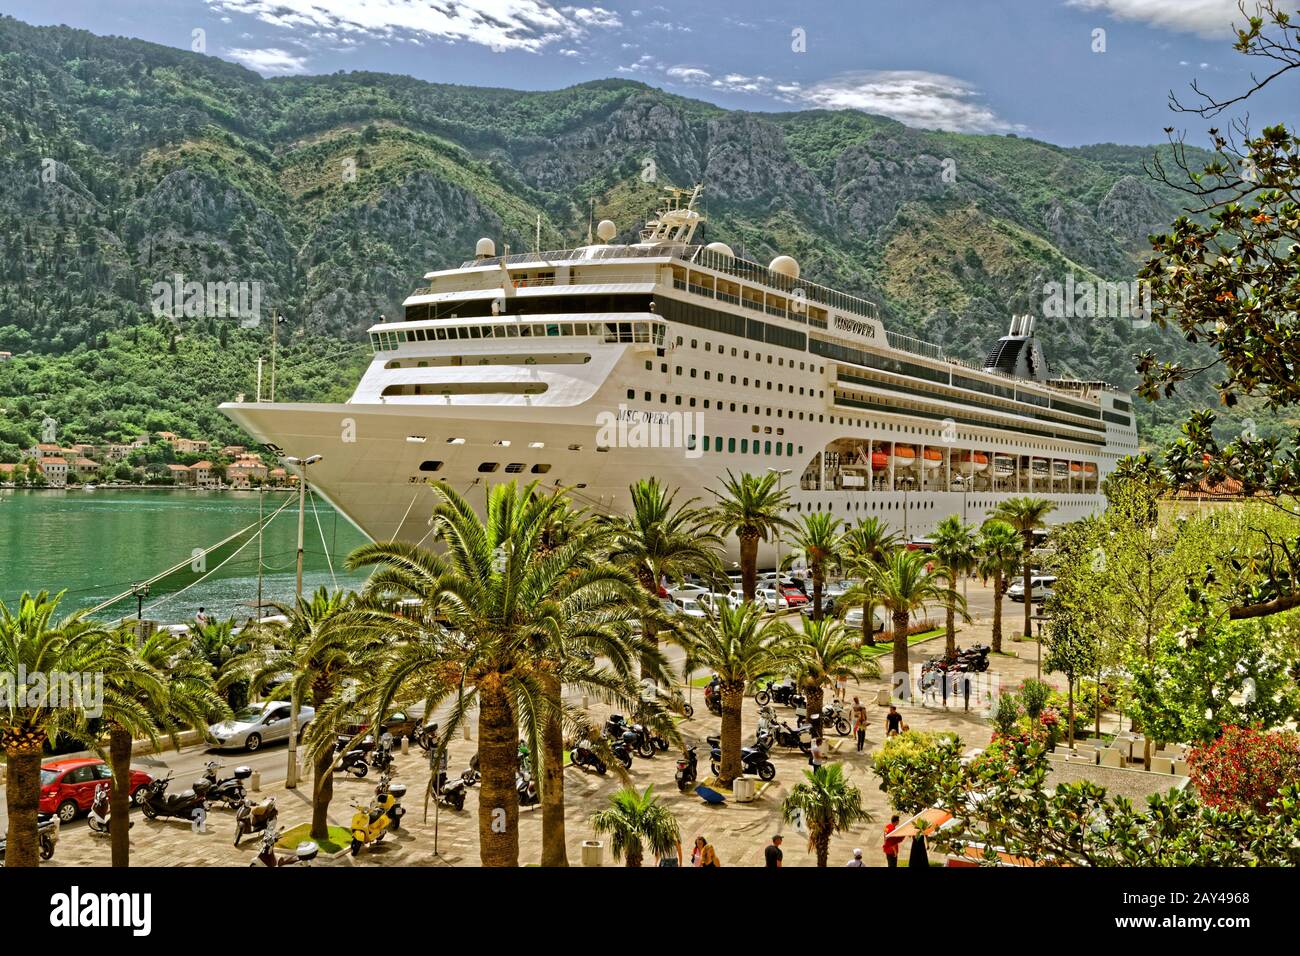 Cruise ship MSC 'Opera' at the cruise port of Kotor, Montenegro. Stock Photo